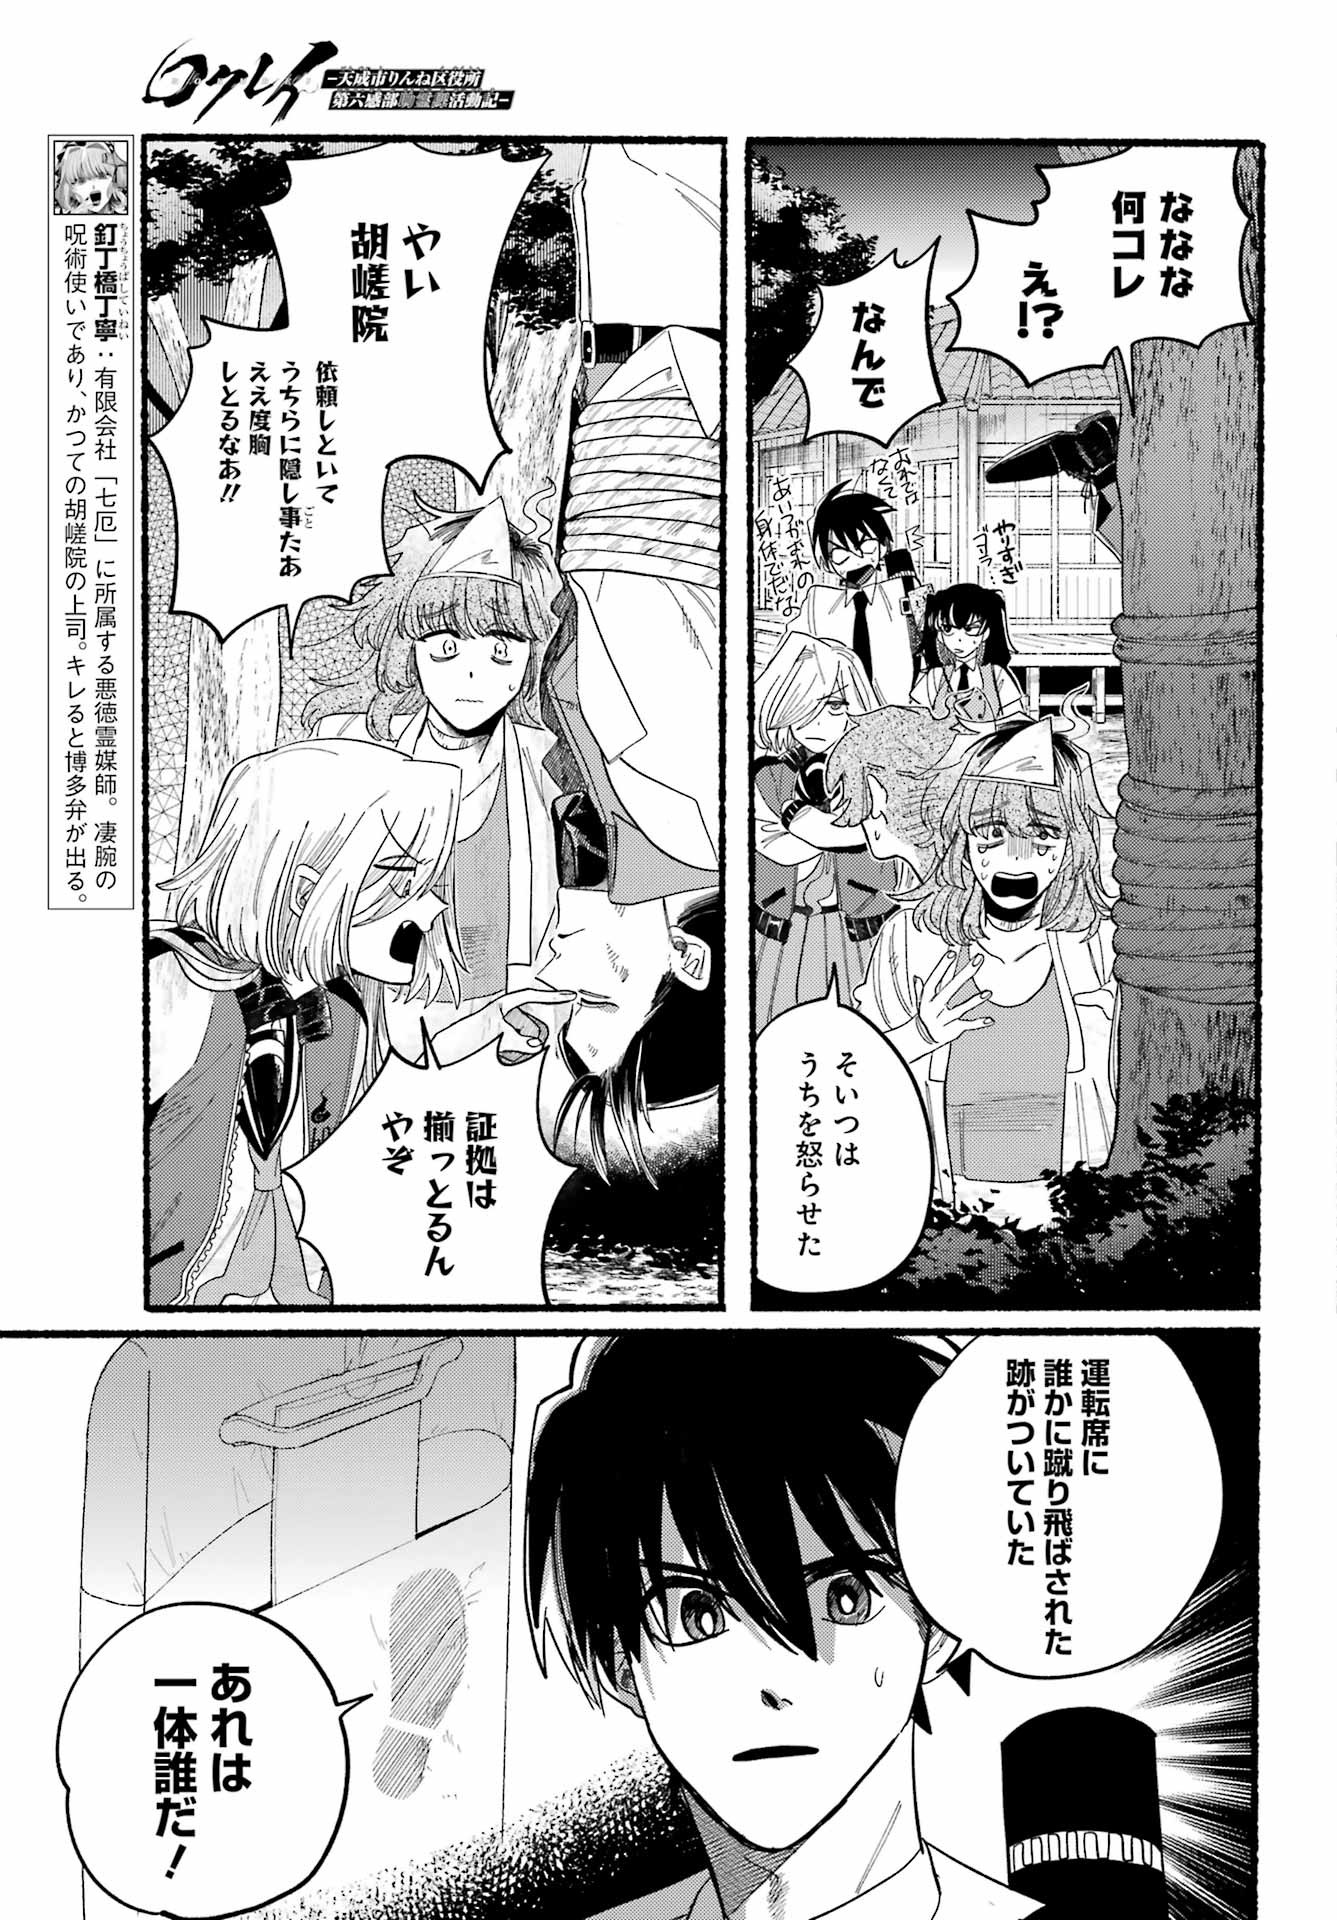 Rokurei - Tenseishi Rinne Kuyakusho Dairokkanbu Joreika Katsudouki - Chapter 10 - Page 17